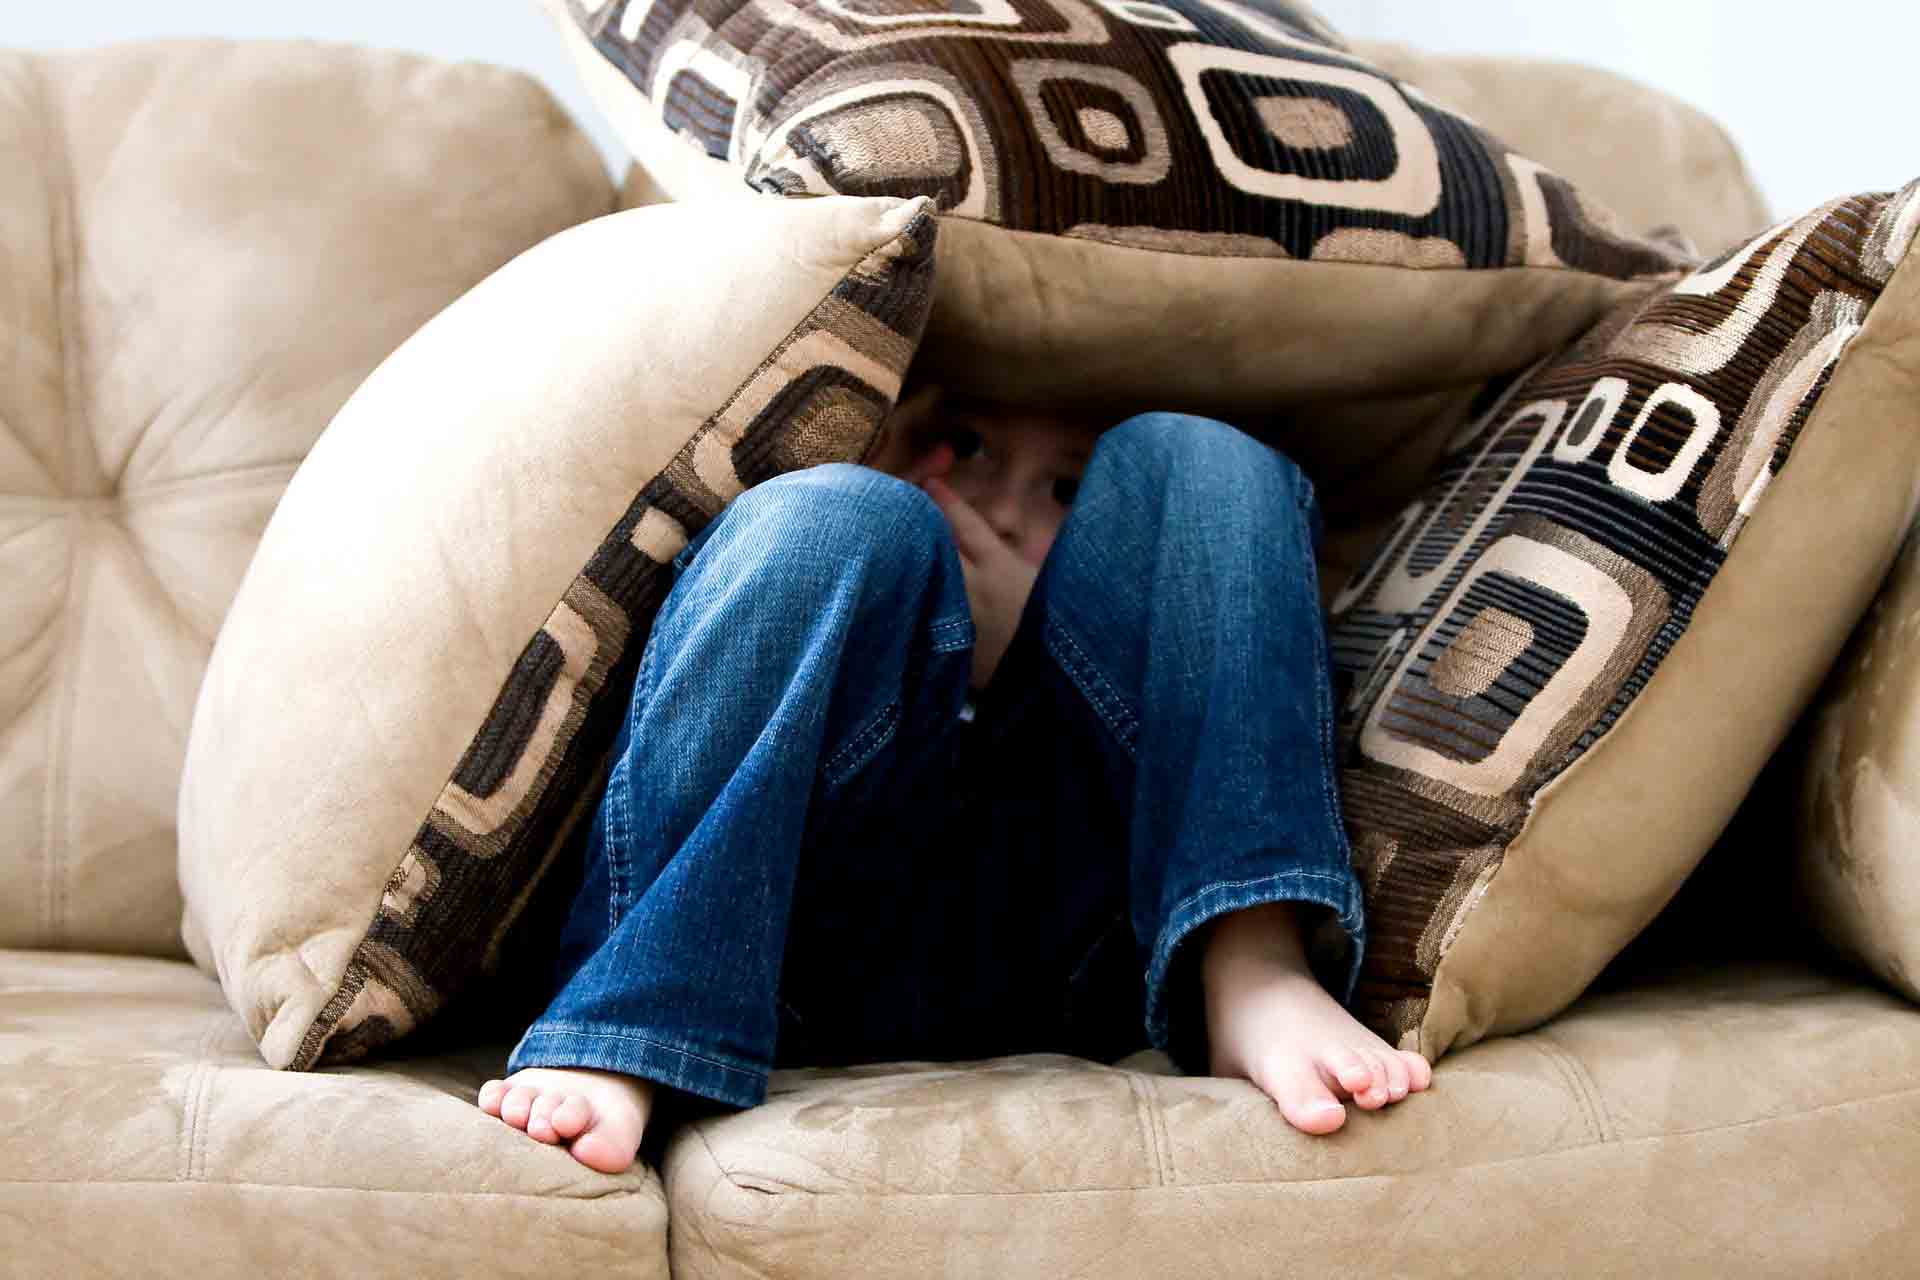 bare-feet-boy-child-couch-262103